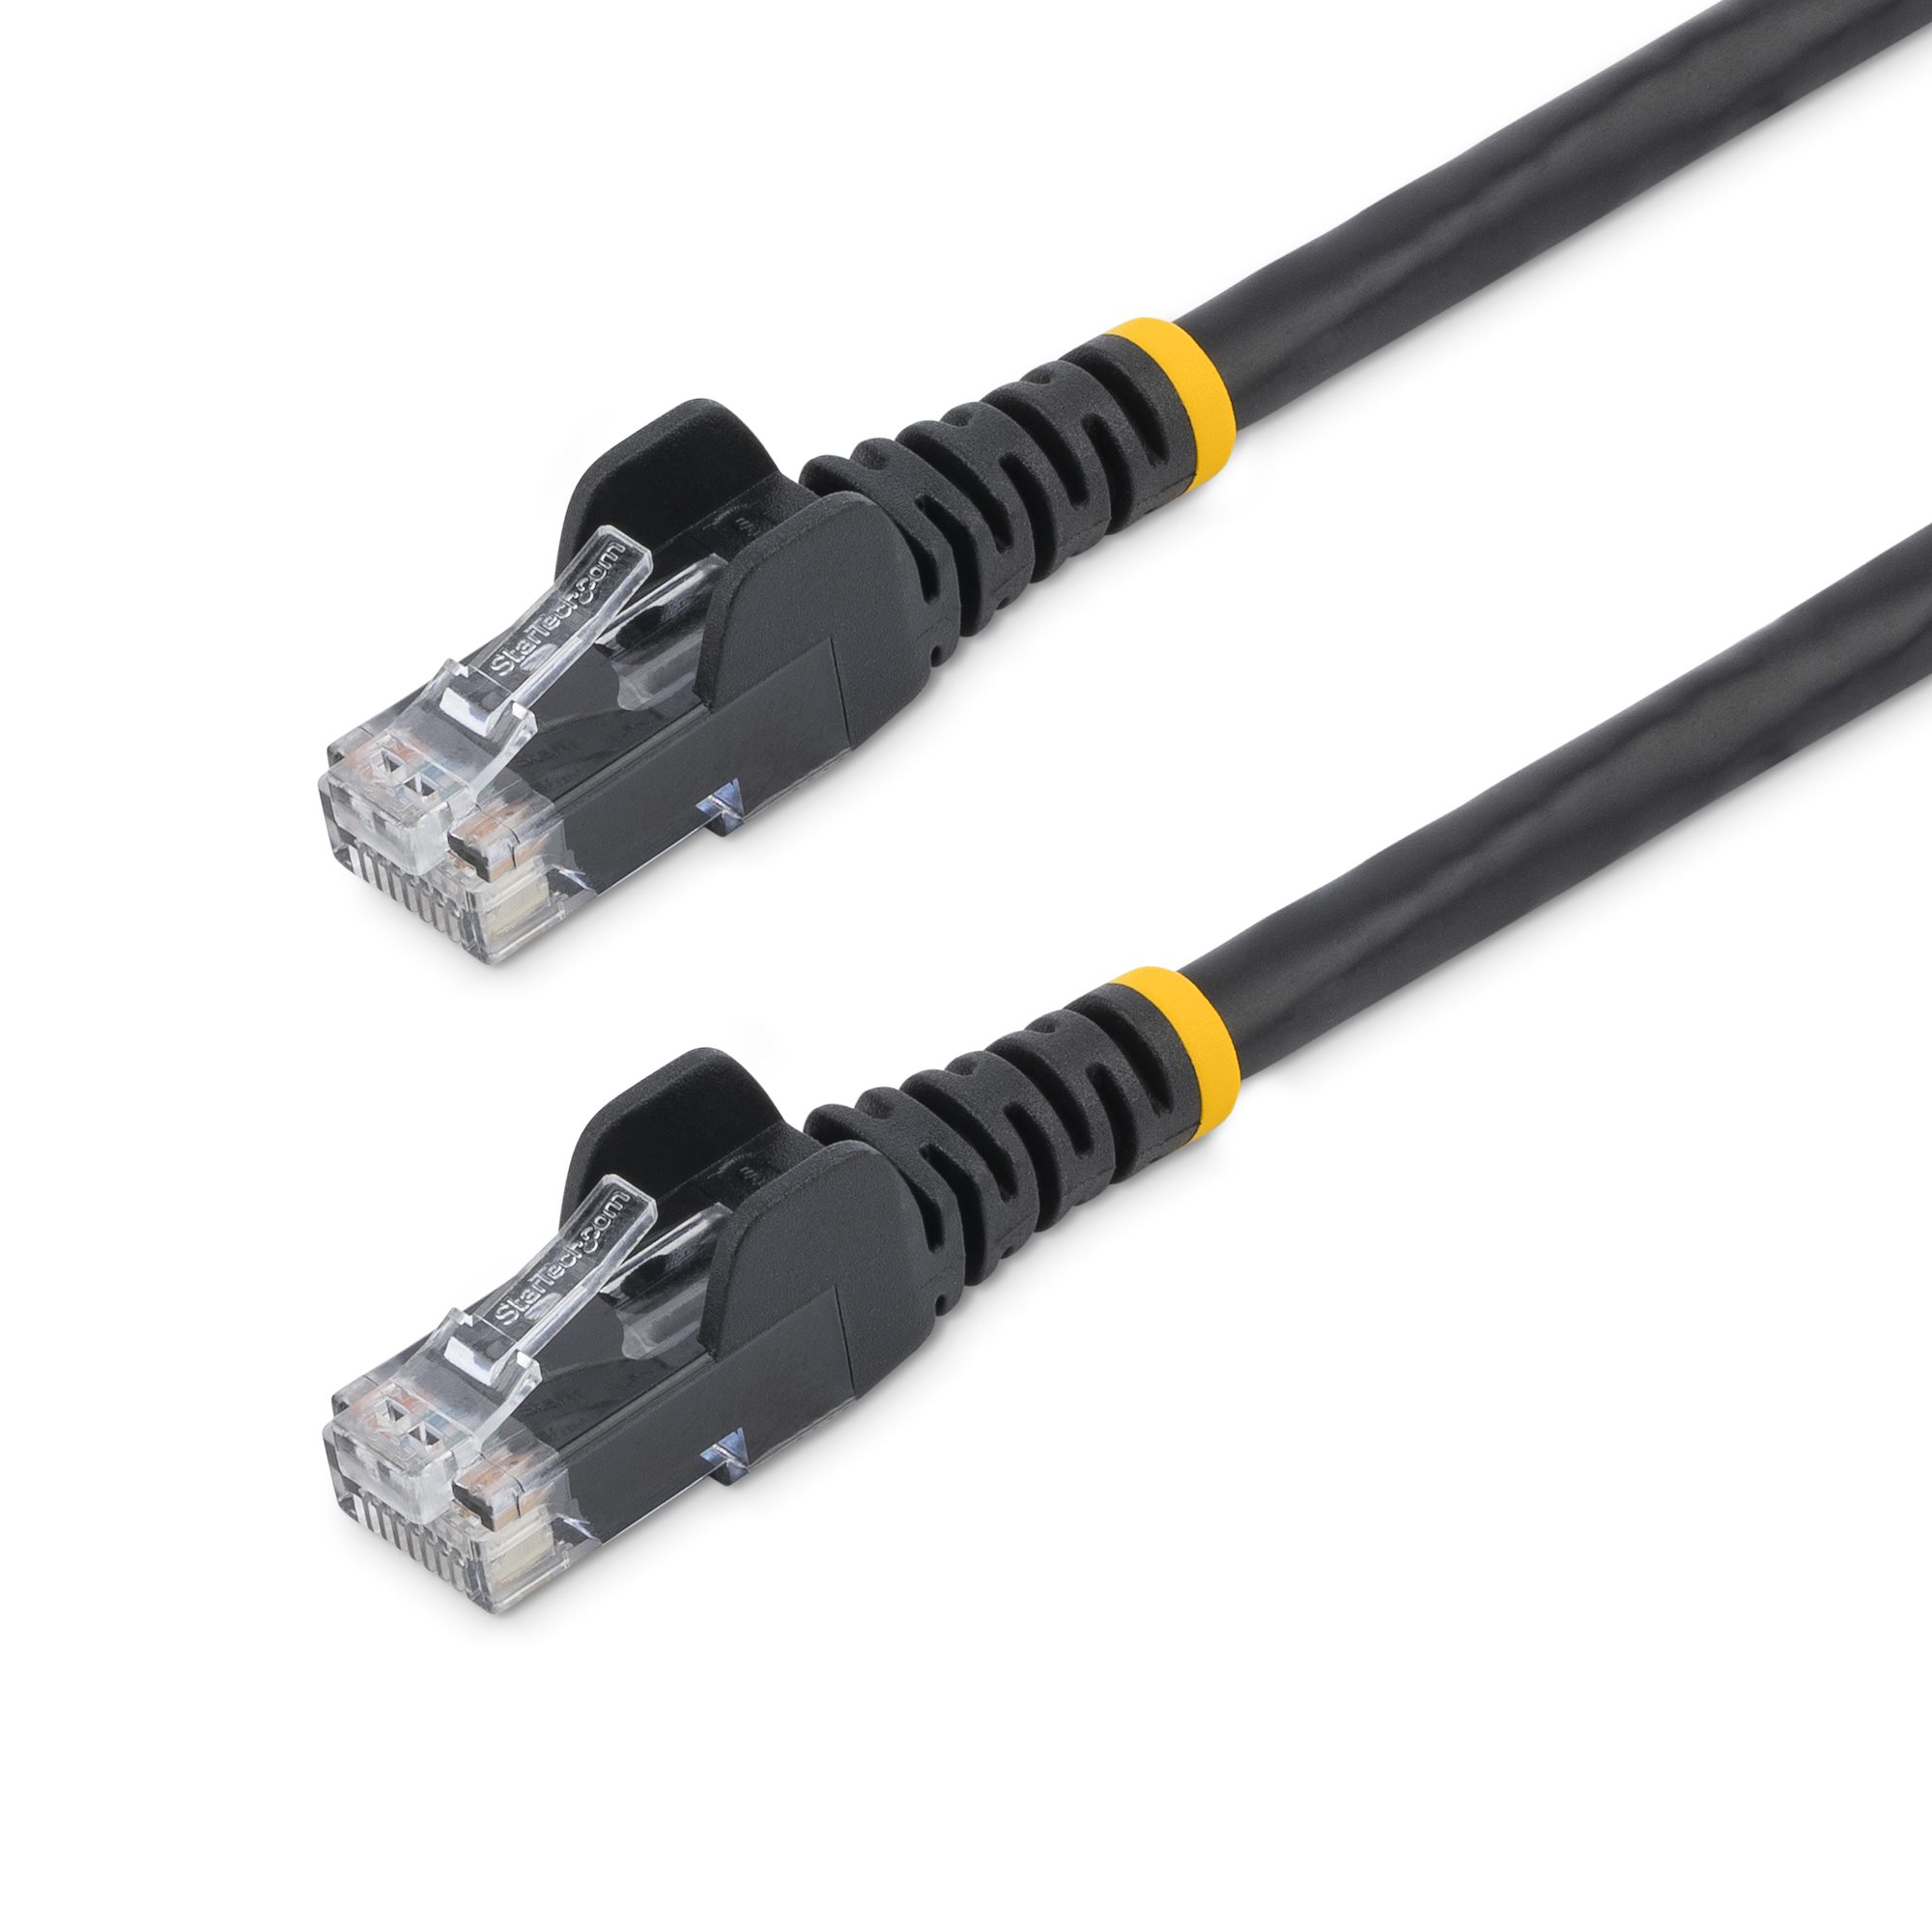 RJ45 CAT6 Ethernet Network Cable Gray 5ft 15ft 25ft 30ft 50ft 100ft 200ft LOT 